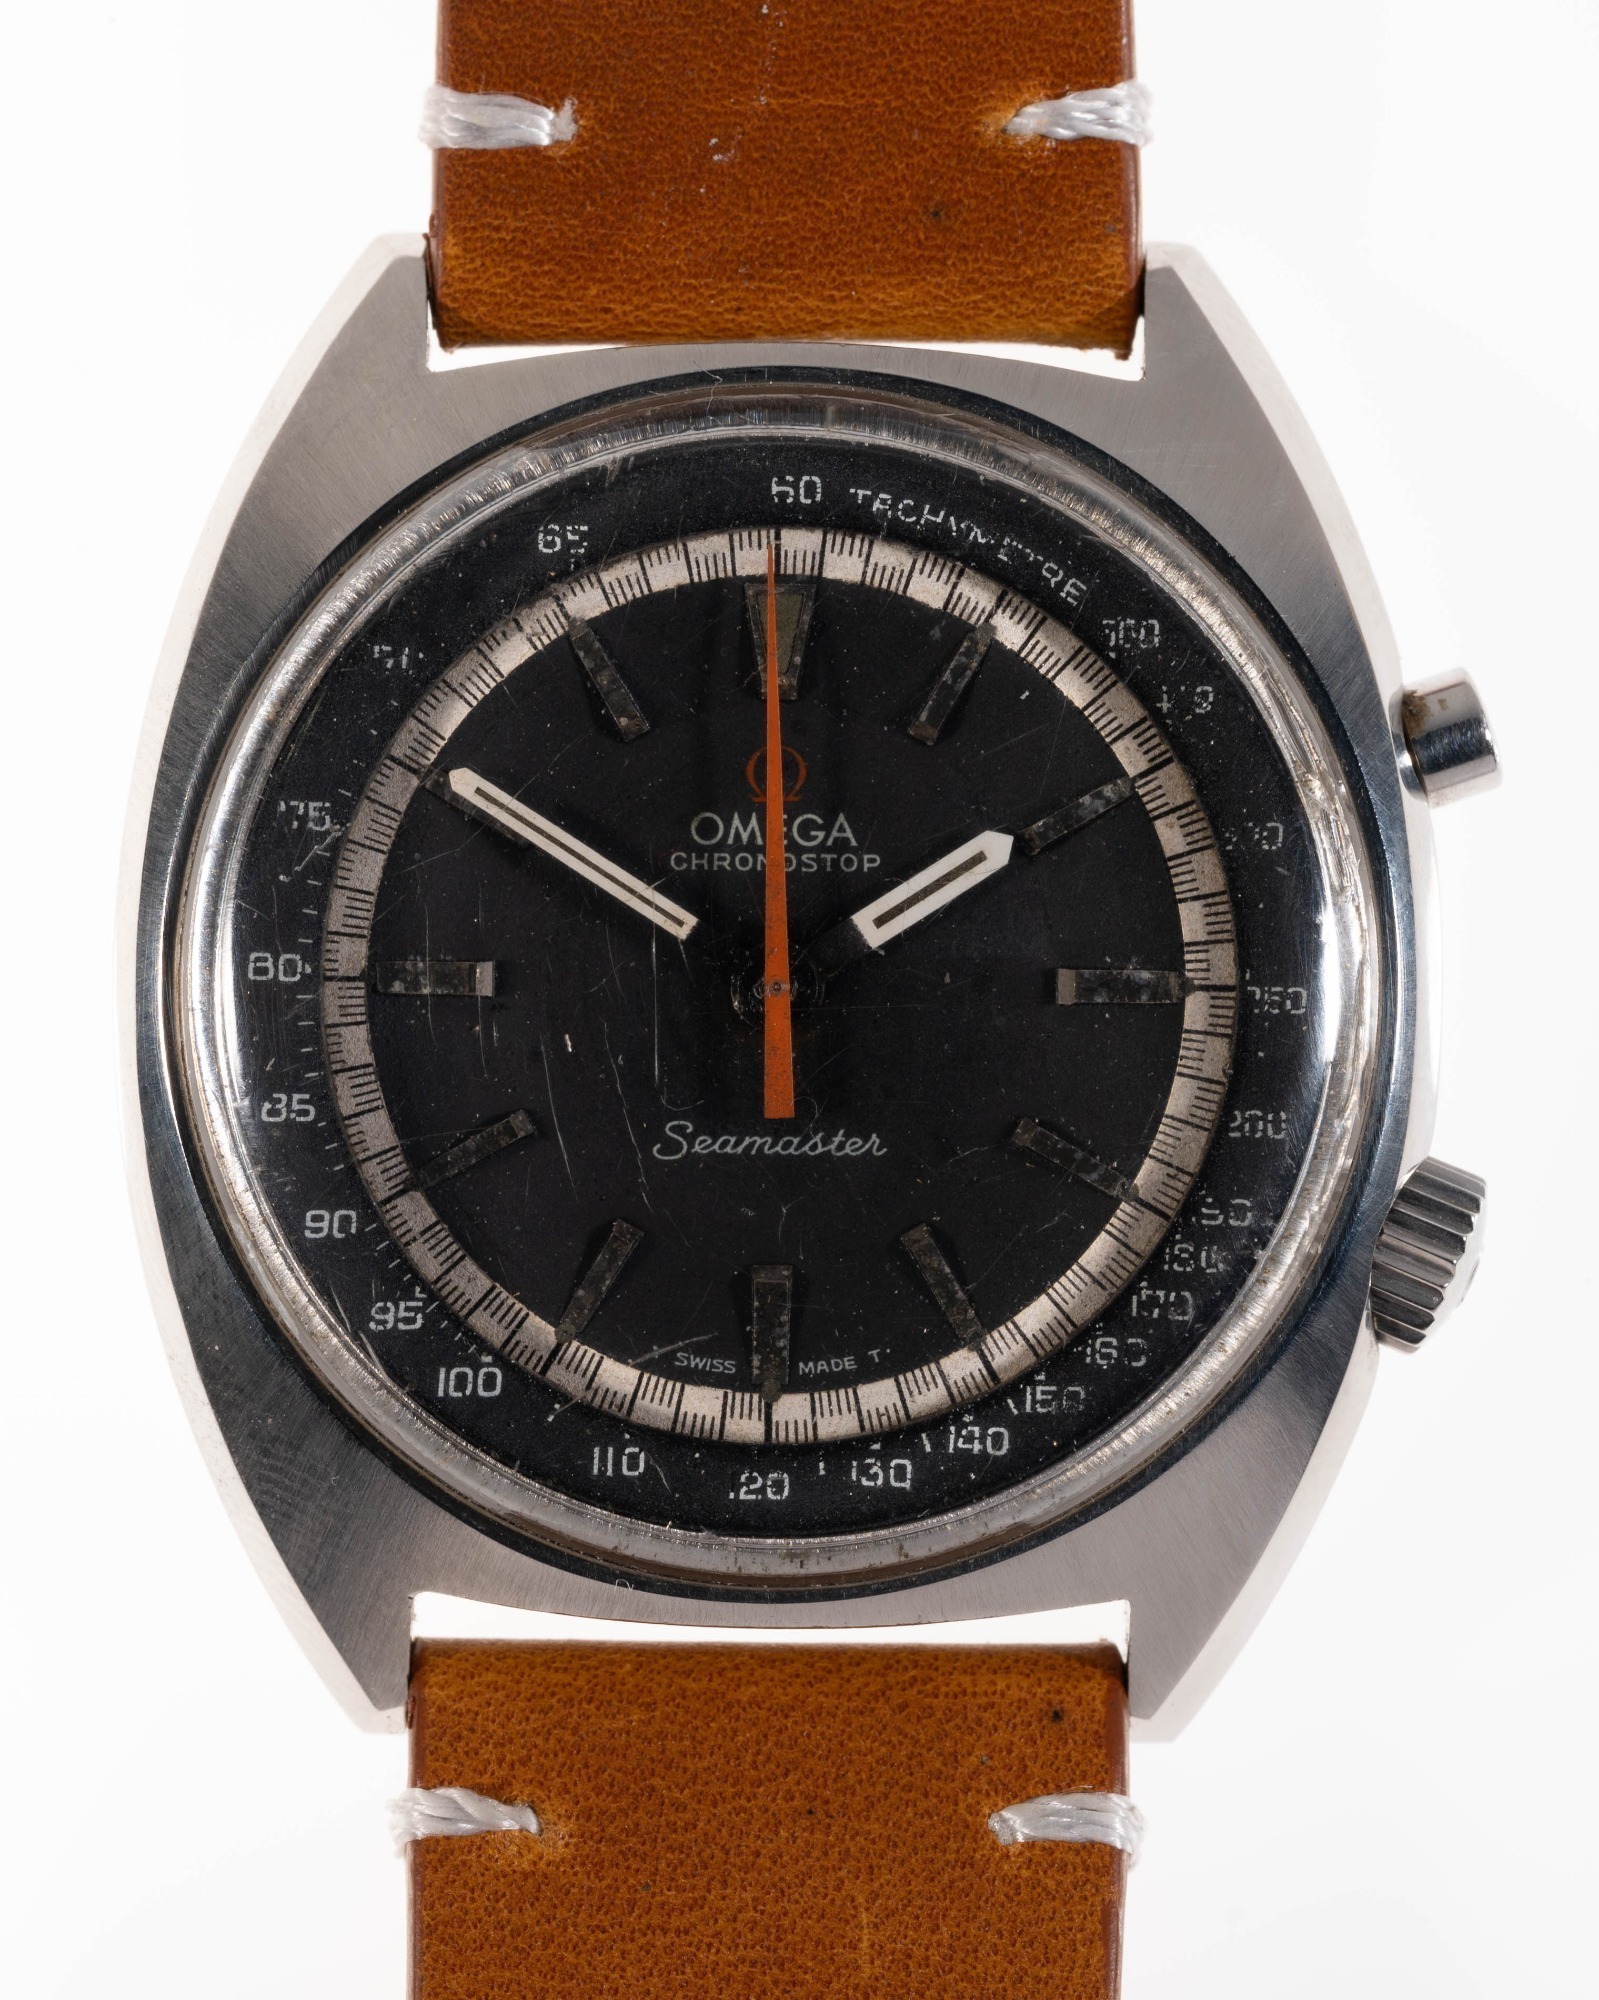 Omega Seamaster ChronoStop Ref. 145.007 Stainless Steel Chronograph Wristwatch